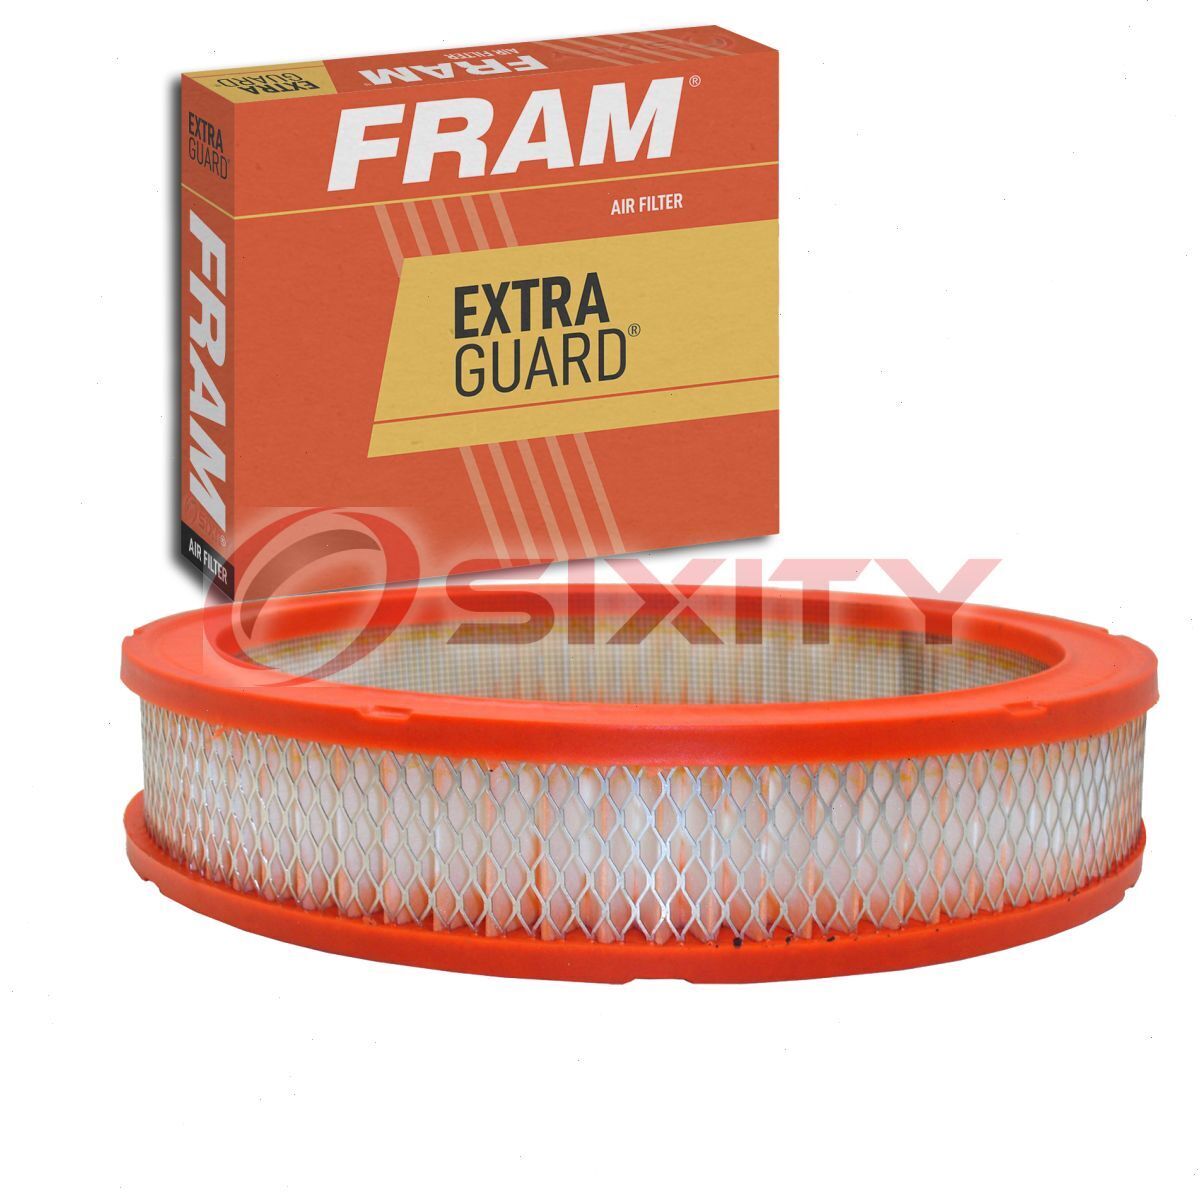 FRAM Extra Guard Air Filter for 1975-1982 Ford Granada Intake Inlet Manifold nl